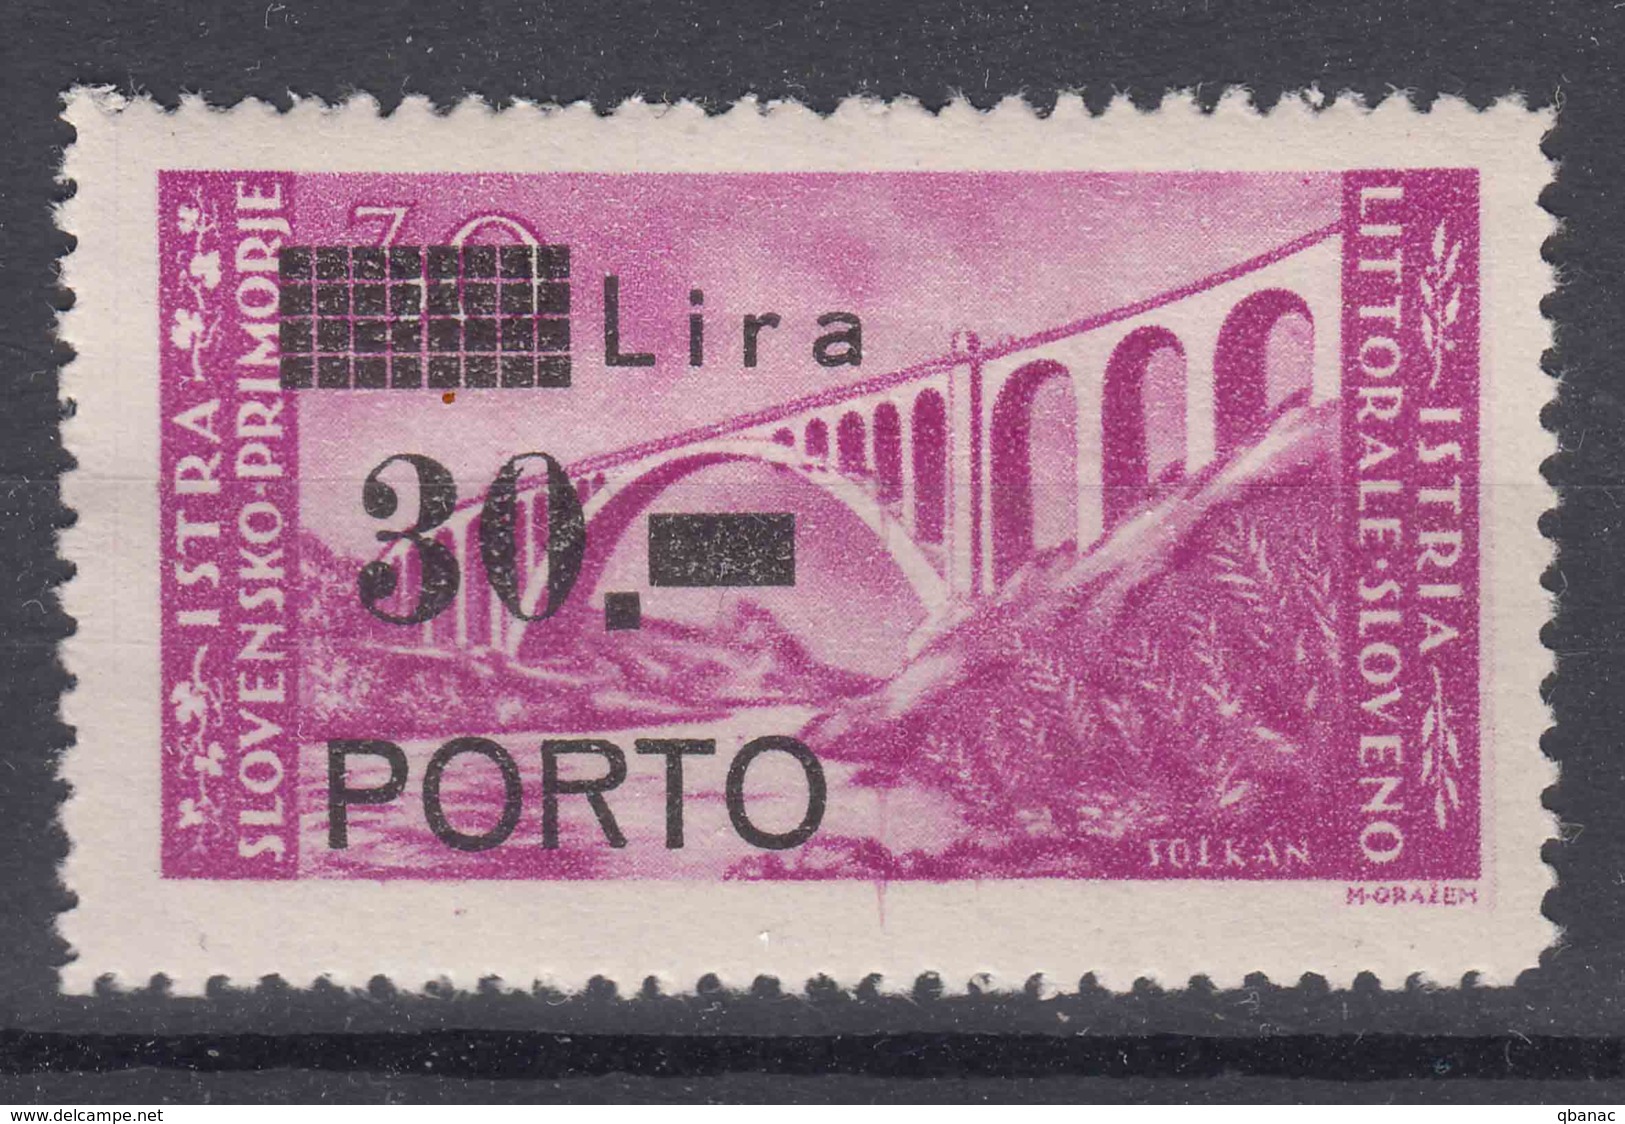 Istria Litorale Yugoslavia Occupation, Porto 1946 Sassone#13 Mint Hinged - Occup. Iugoslava: Istria